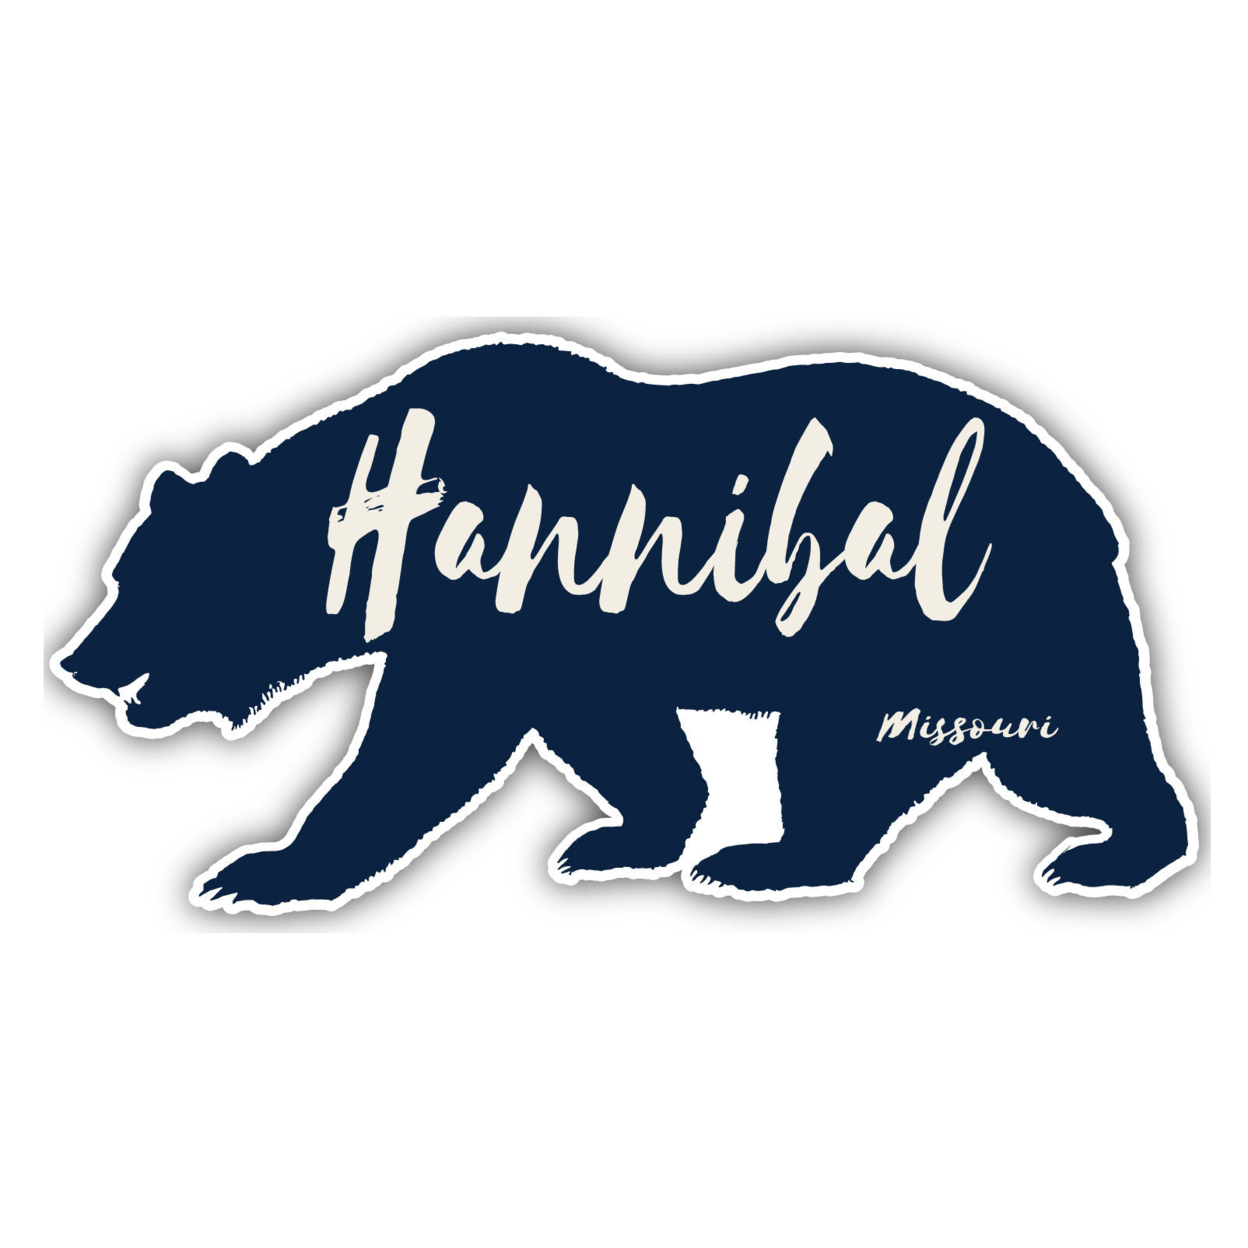 Hannibal Missouri Souvenir Decorative Stickers (Choose Theme And Size) - 4-Pack, 6-Inch, Bear